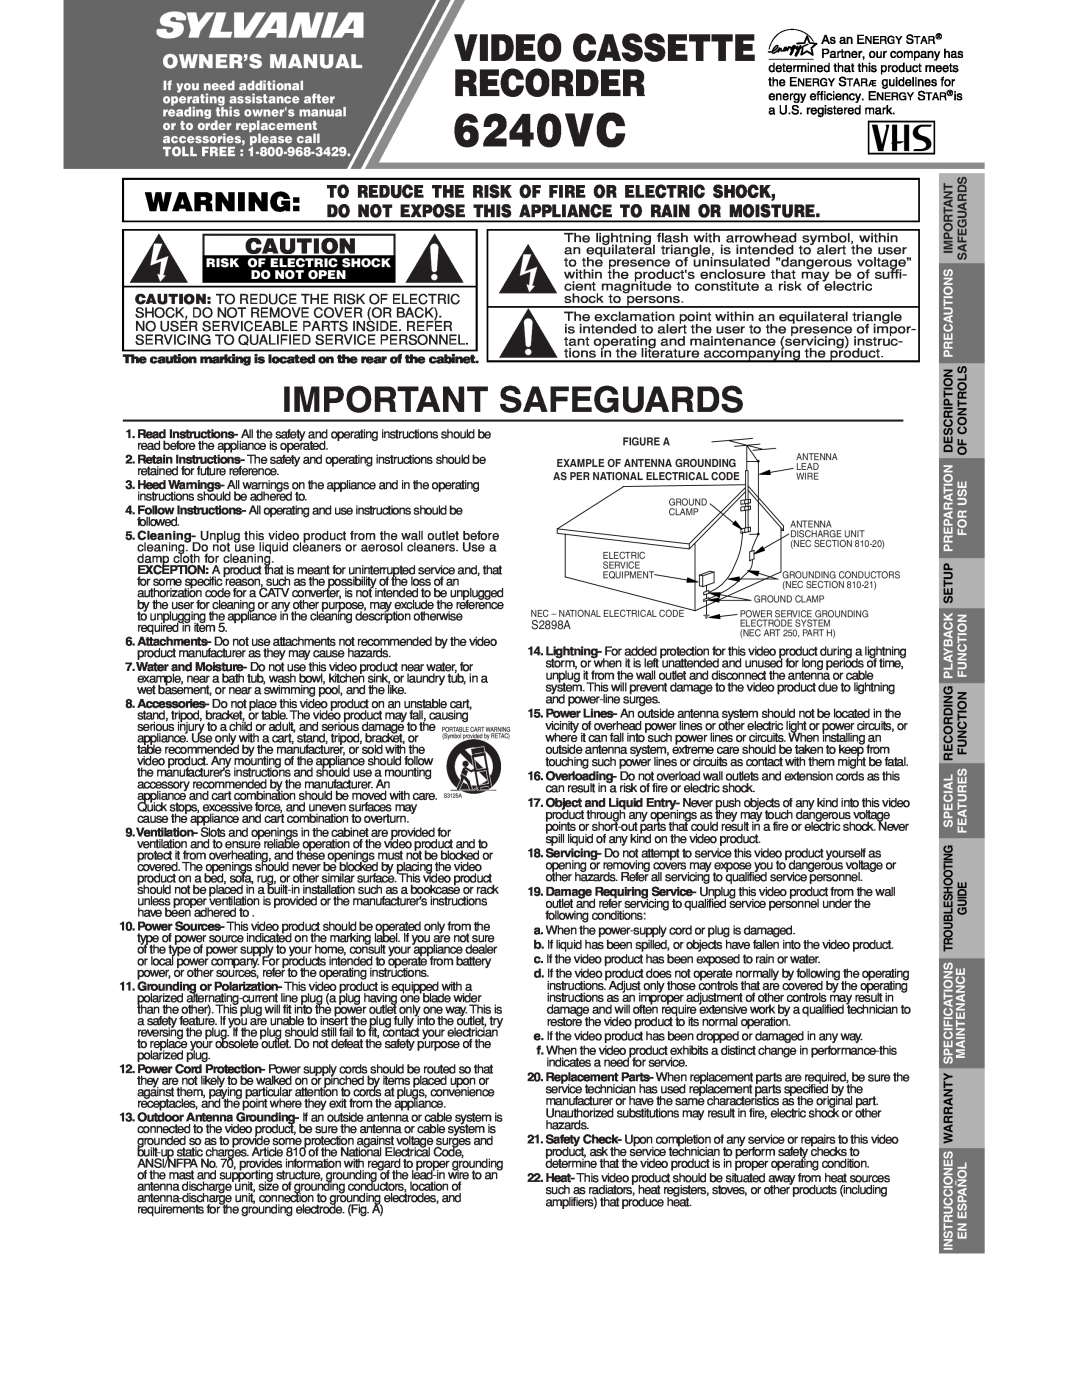 Sylvania 6240VC owner manual Important Safeguards, Video Cassette Recorder, Owner’S Manual, Description, Controls 